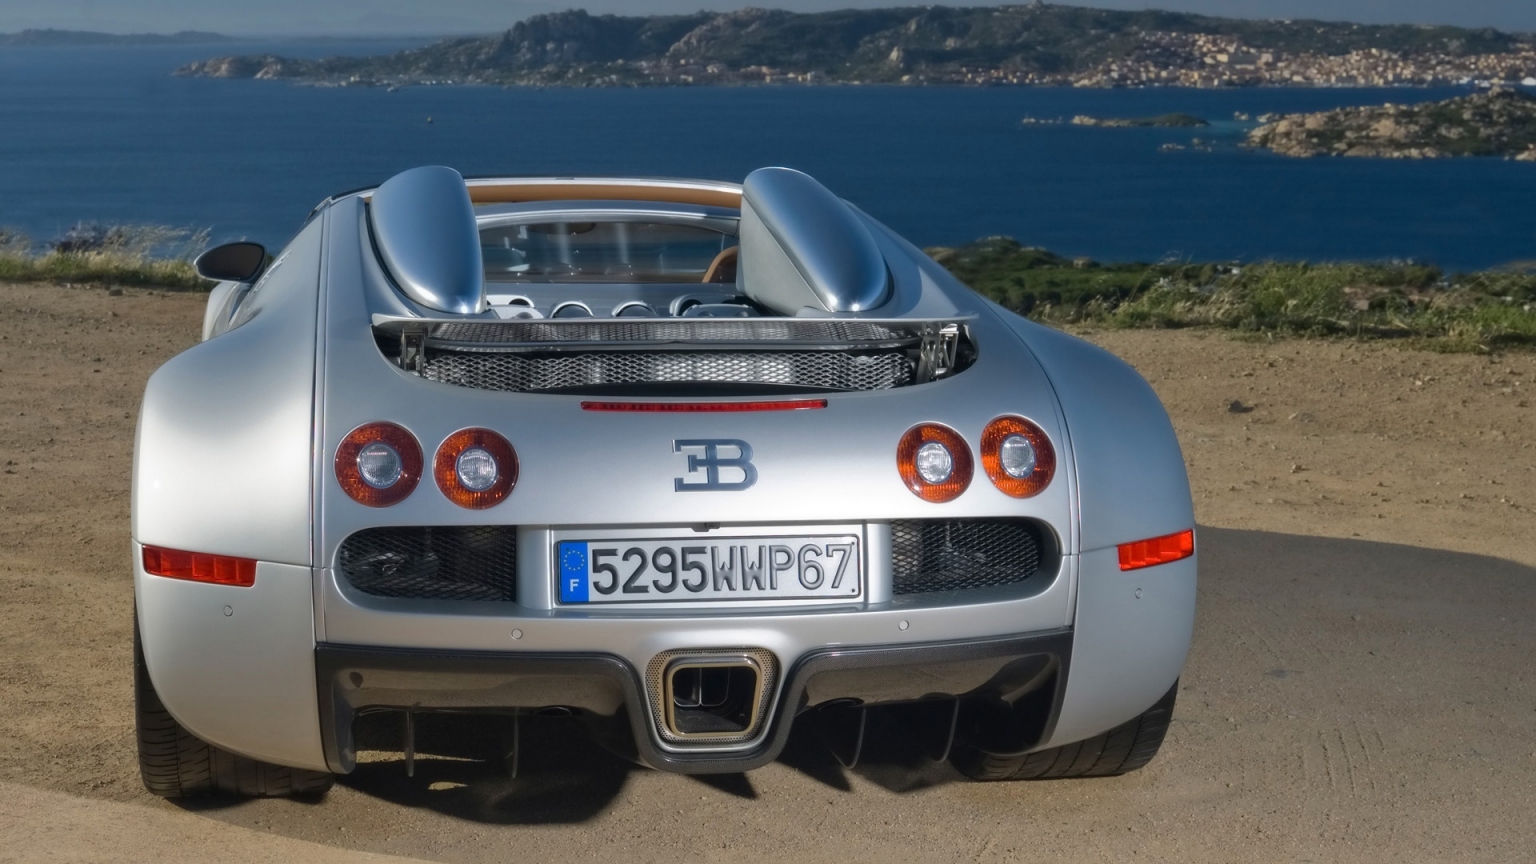 Bugatti Veyron 16.4 Grand Sport in Sardinia 2010 - Rear for 1536 x 864 HDTV resolution